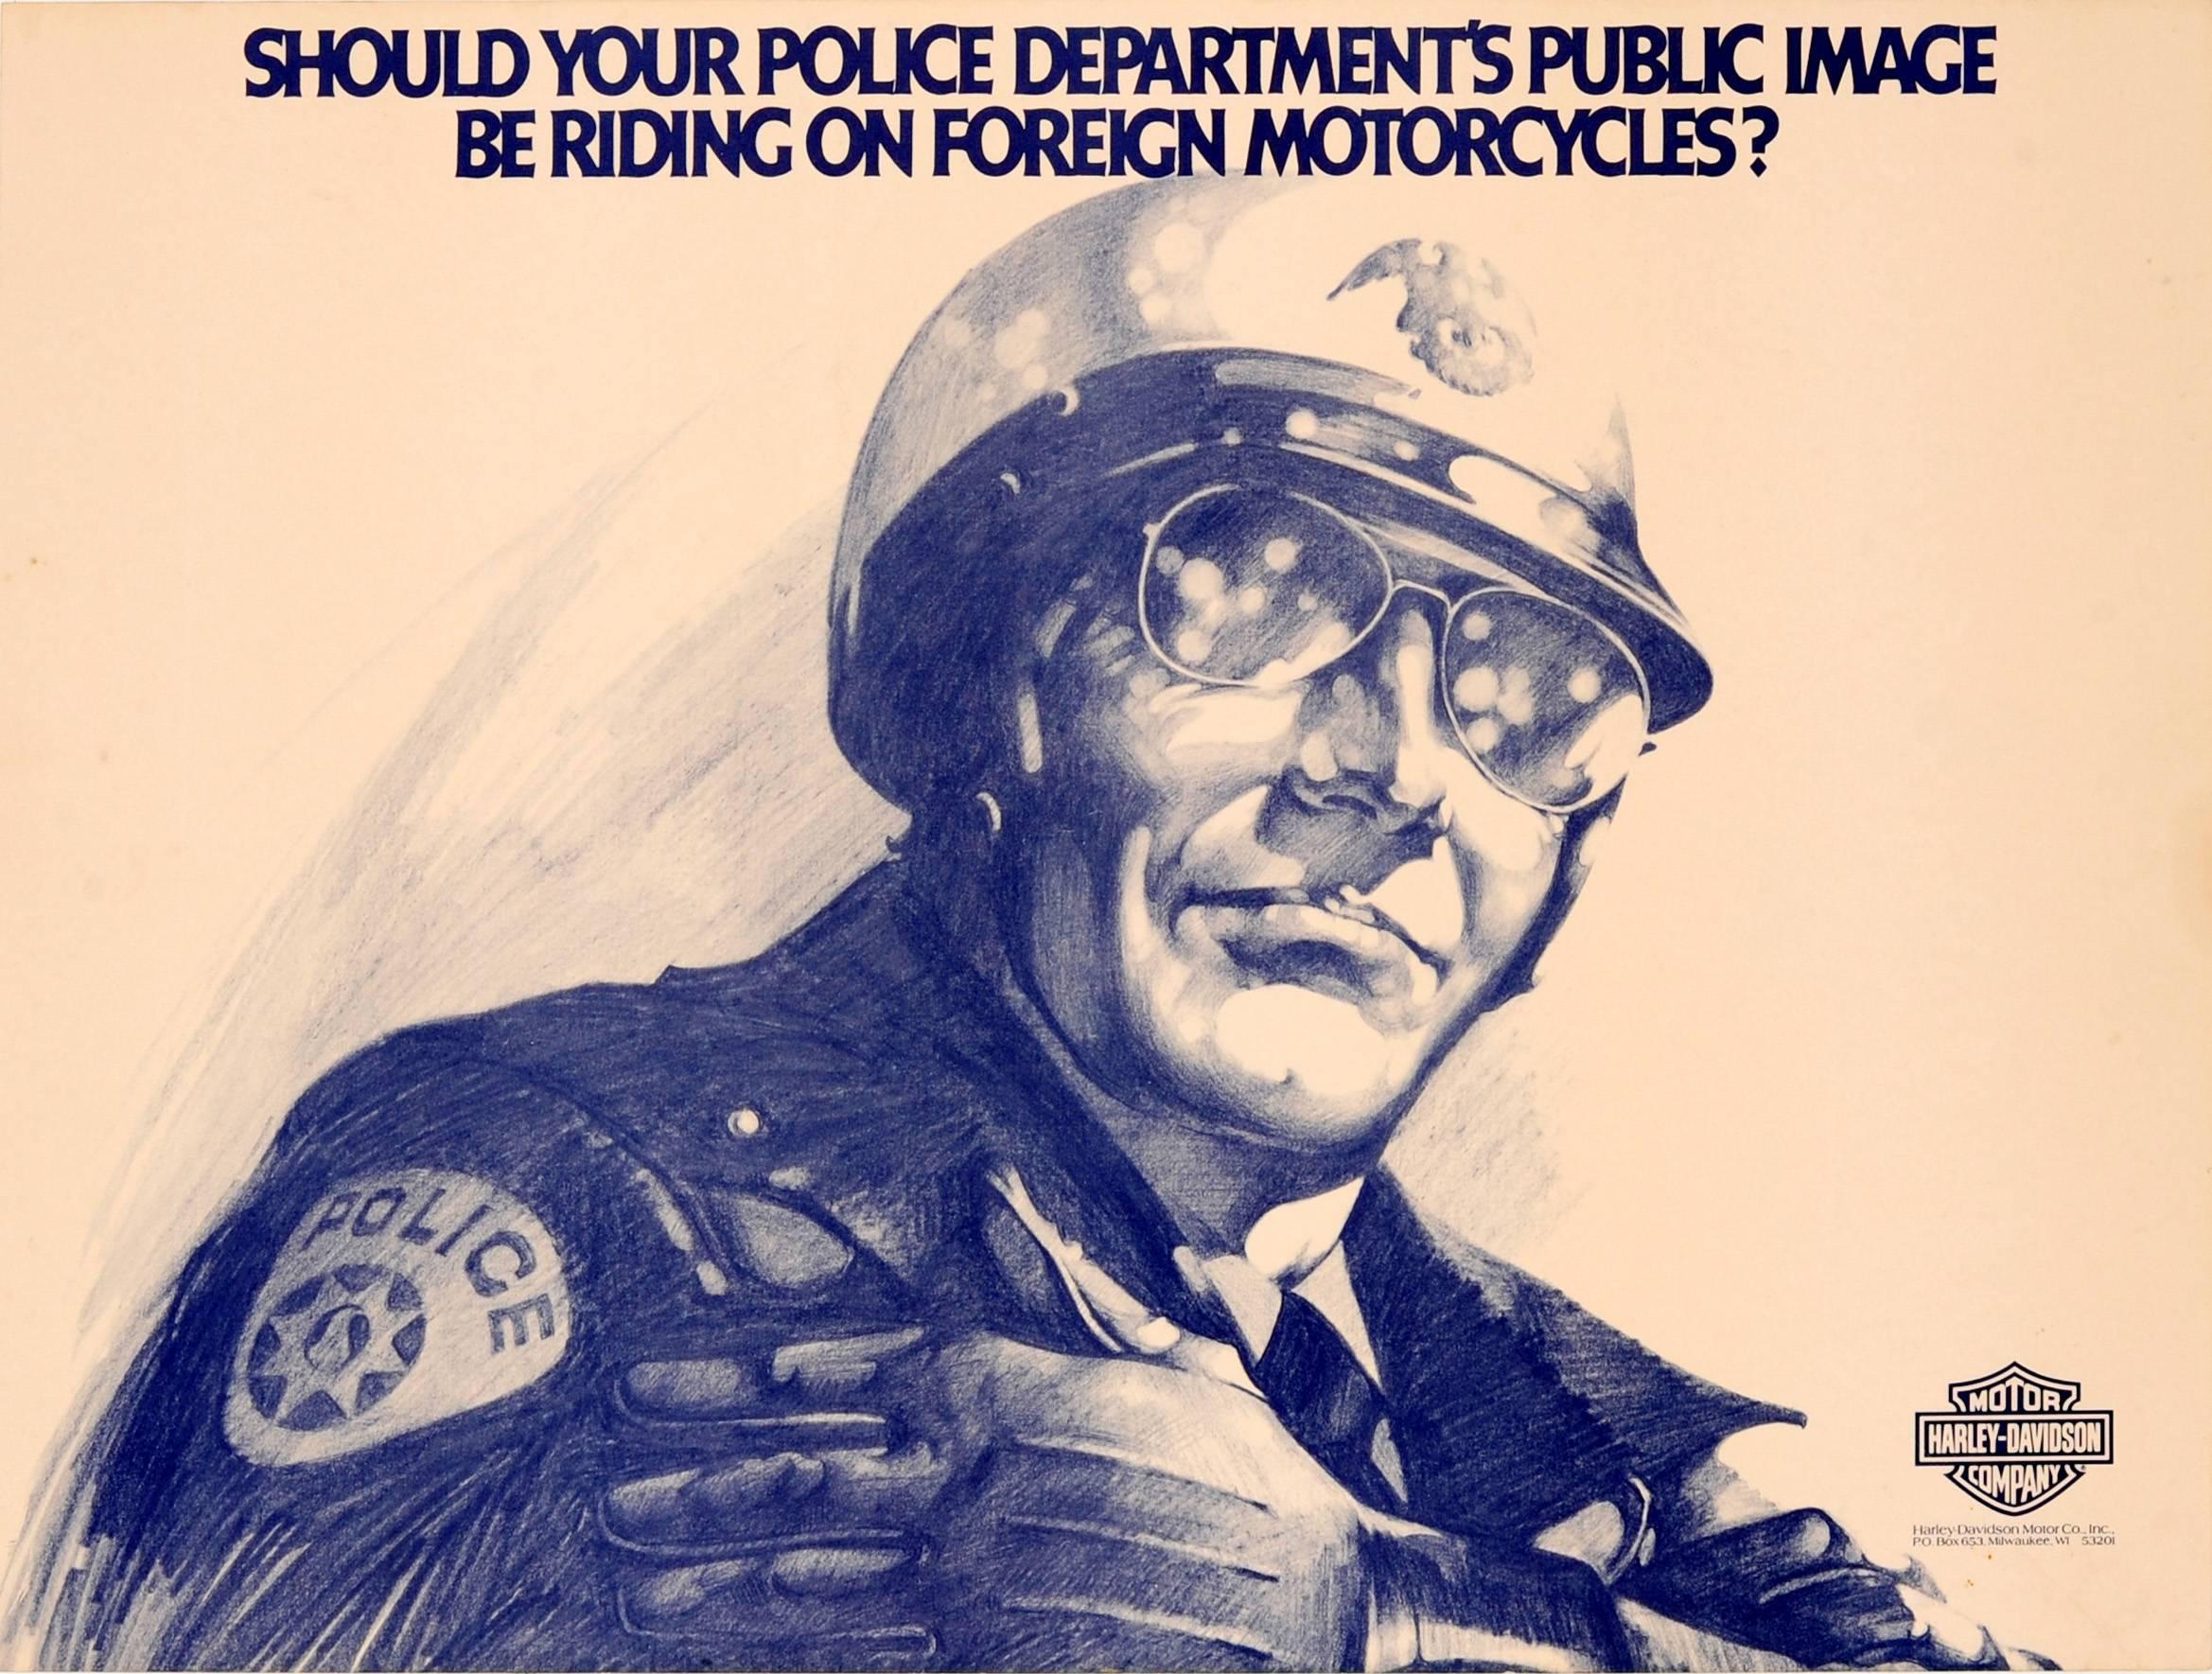 Unknown Print - Rare Original Vintage US Police Department Harley Davidson Motorcycle Poster